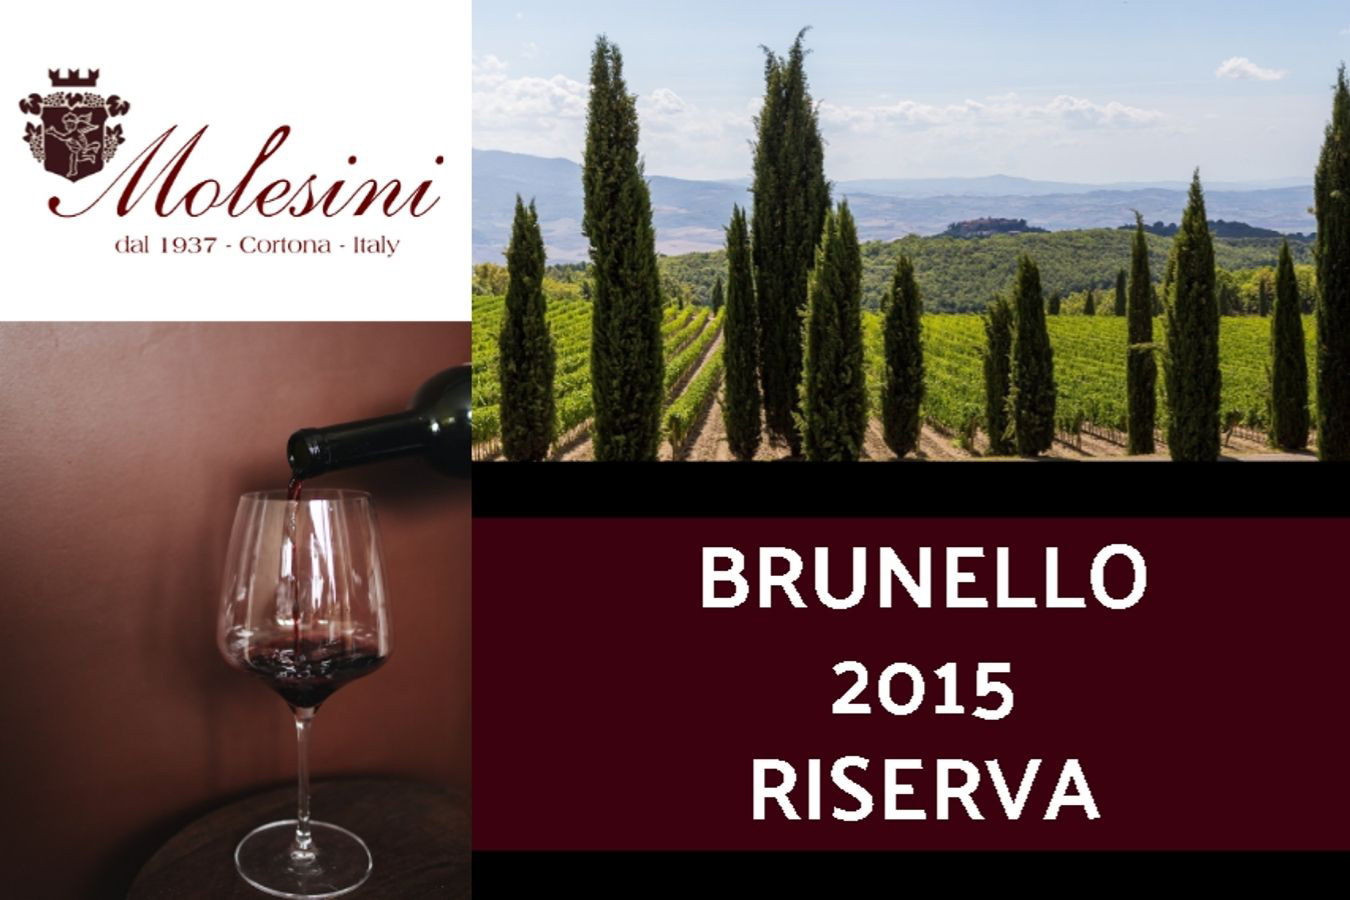 Brunello 2015 Riserva Offer